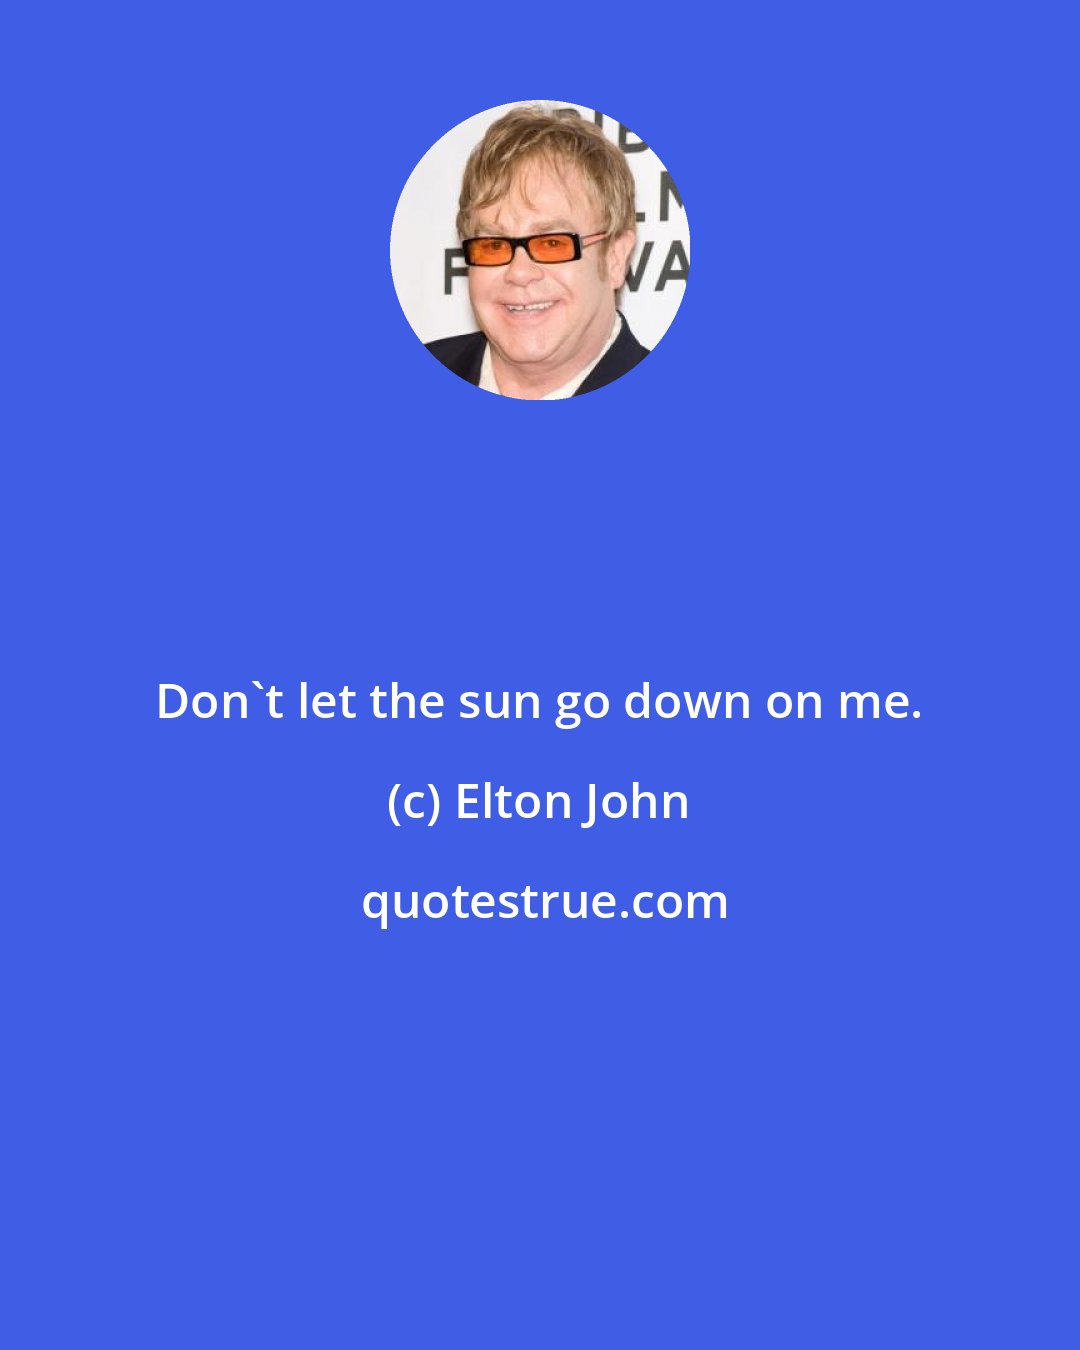 Elton John: Don't let the sun go down on me.